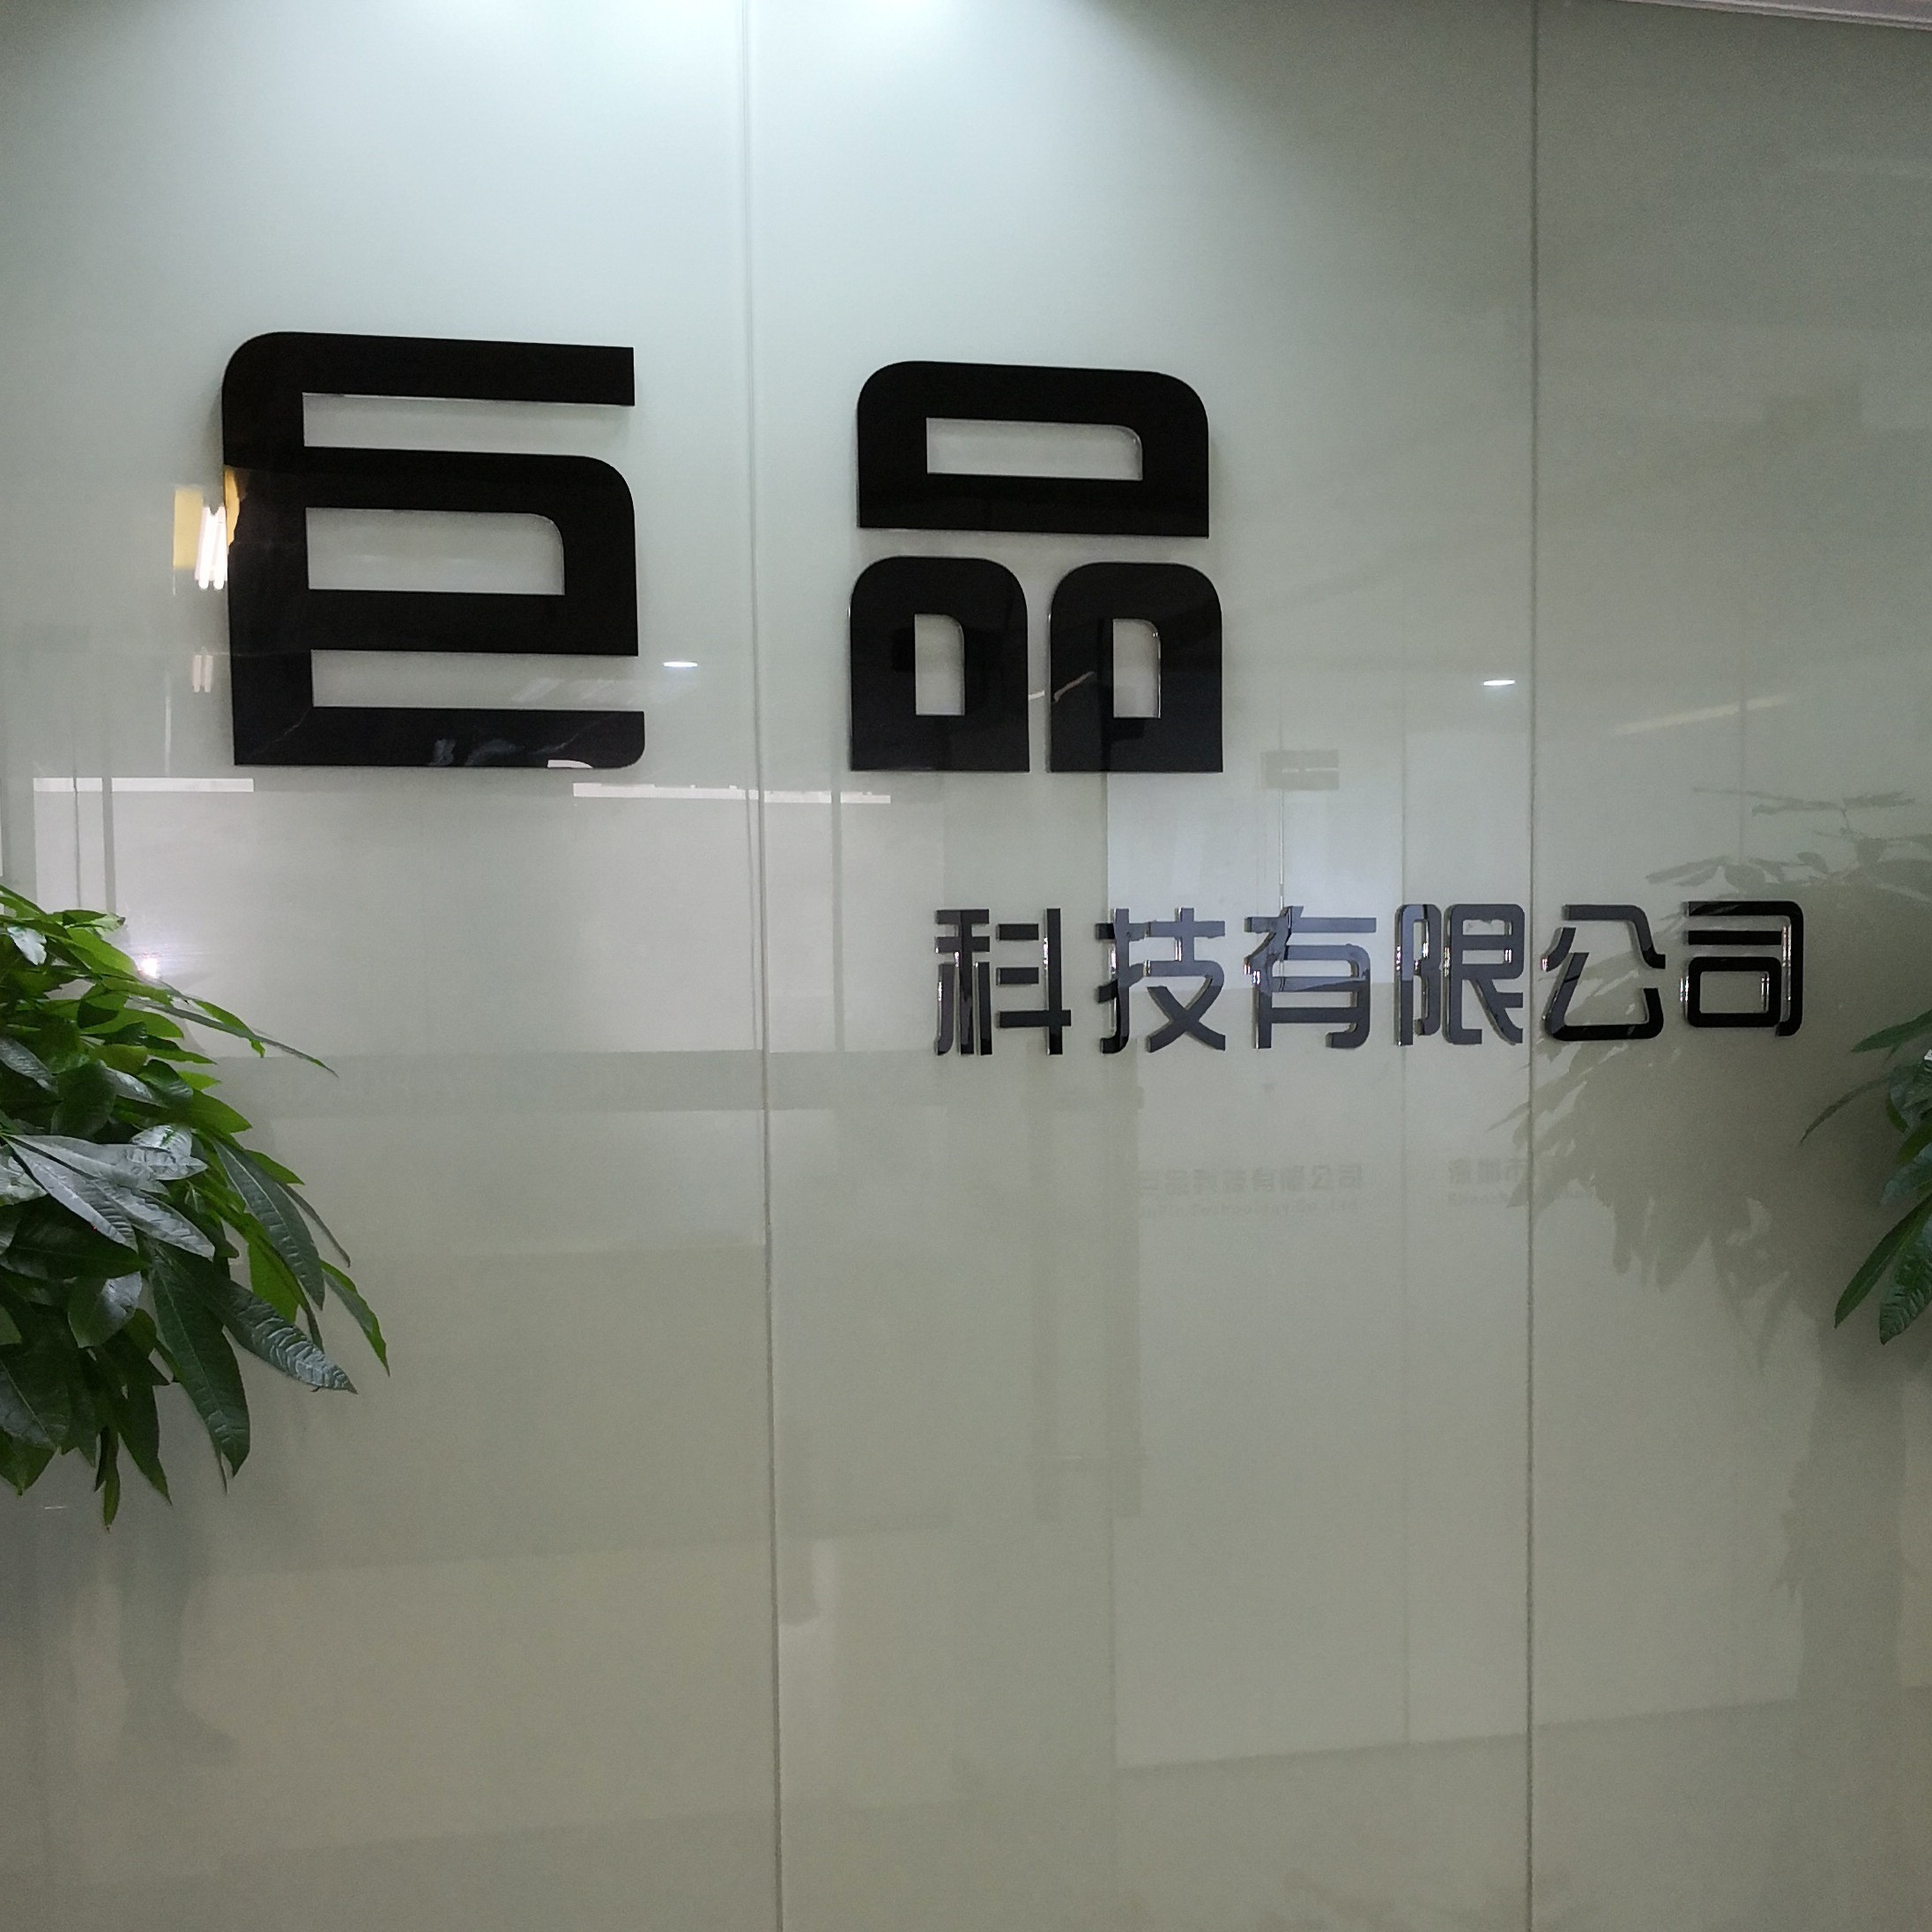 China Shenzhen Jupin Technology Co., Ltd.